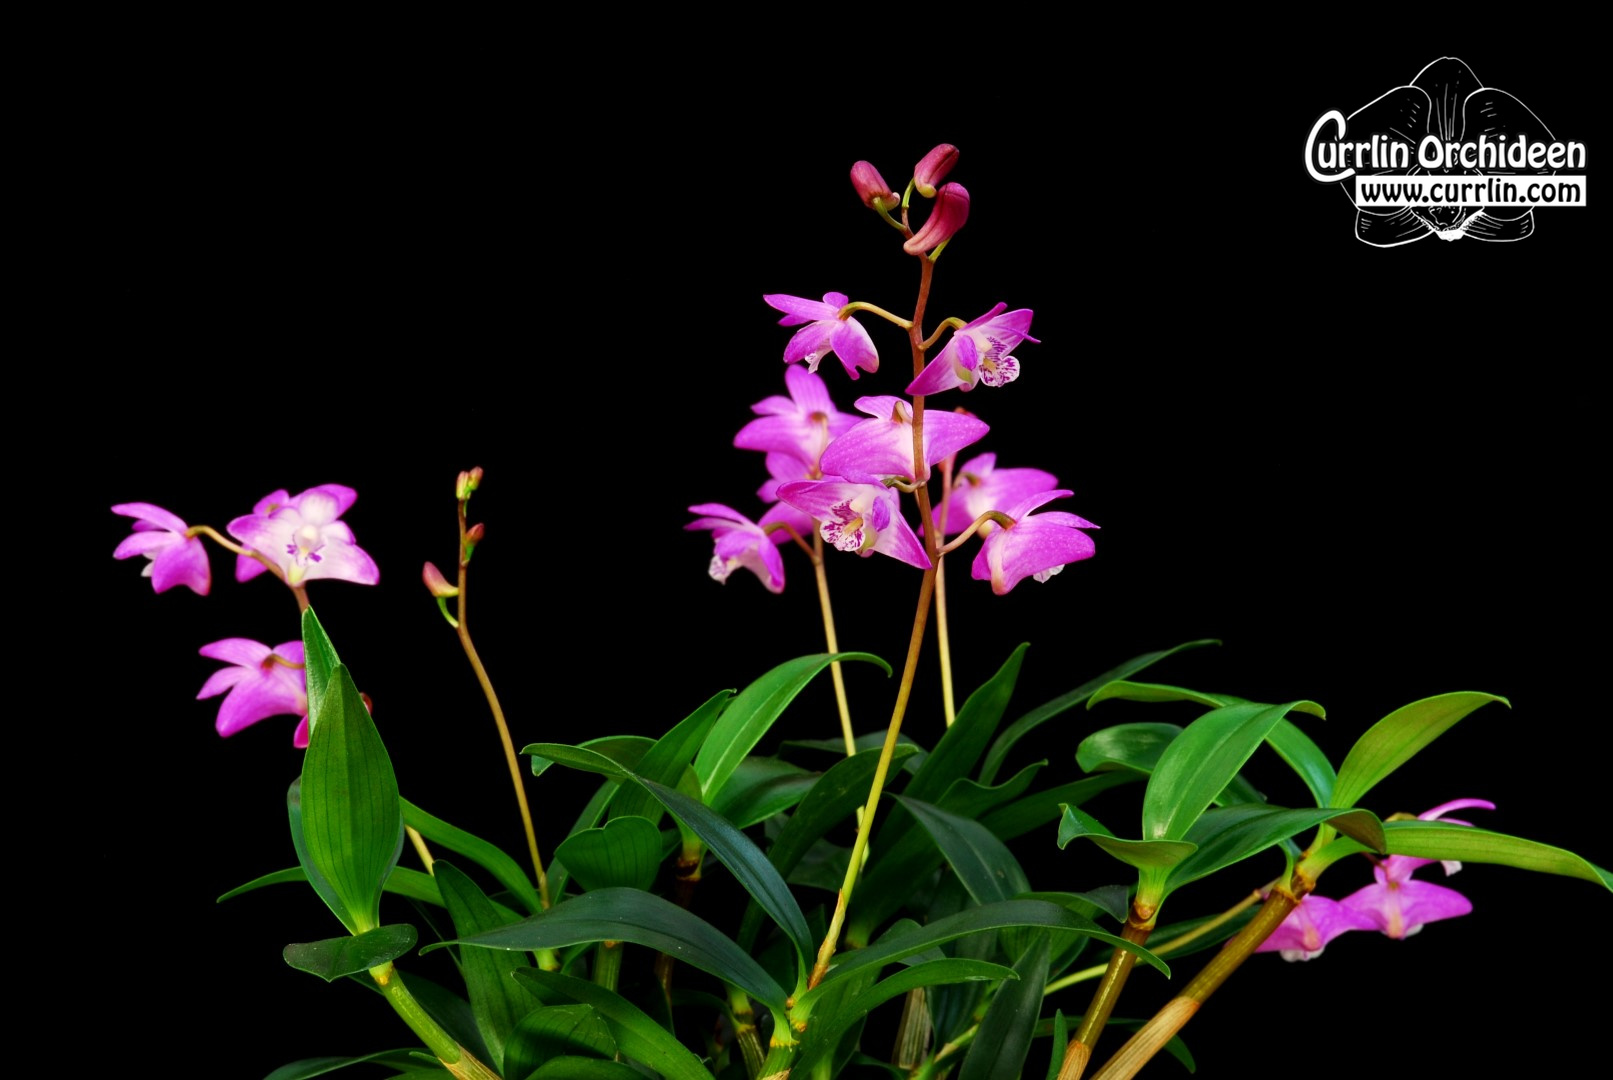 Dendrobium kingianum - Currlin Orchideen